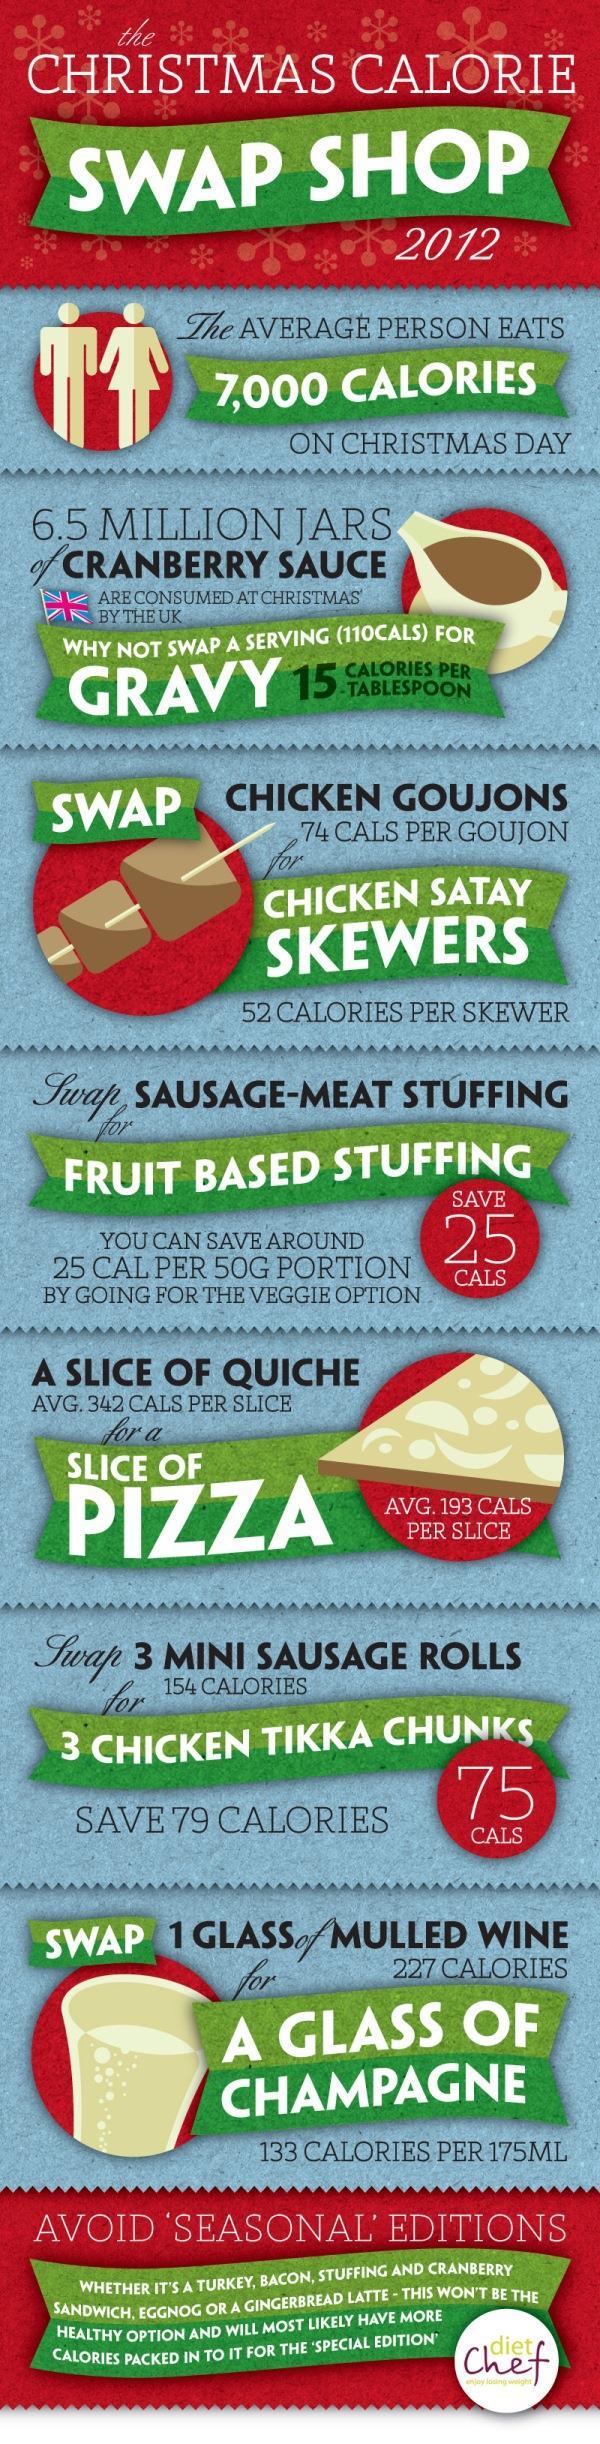 Christmas Calories Infographic